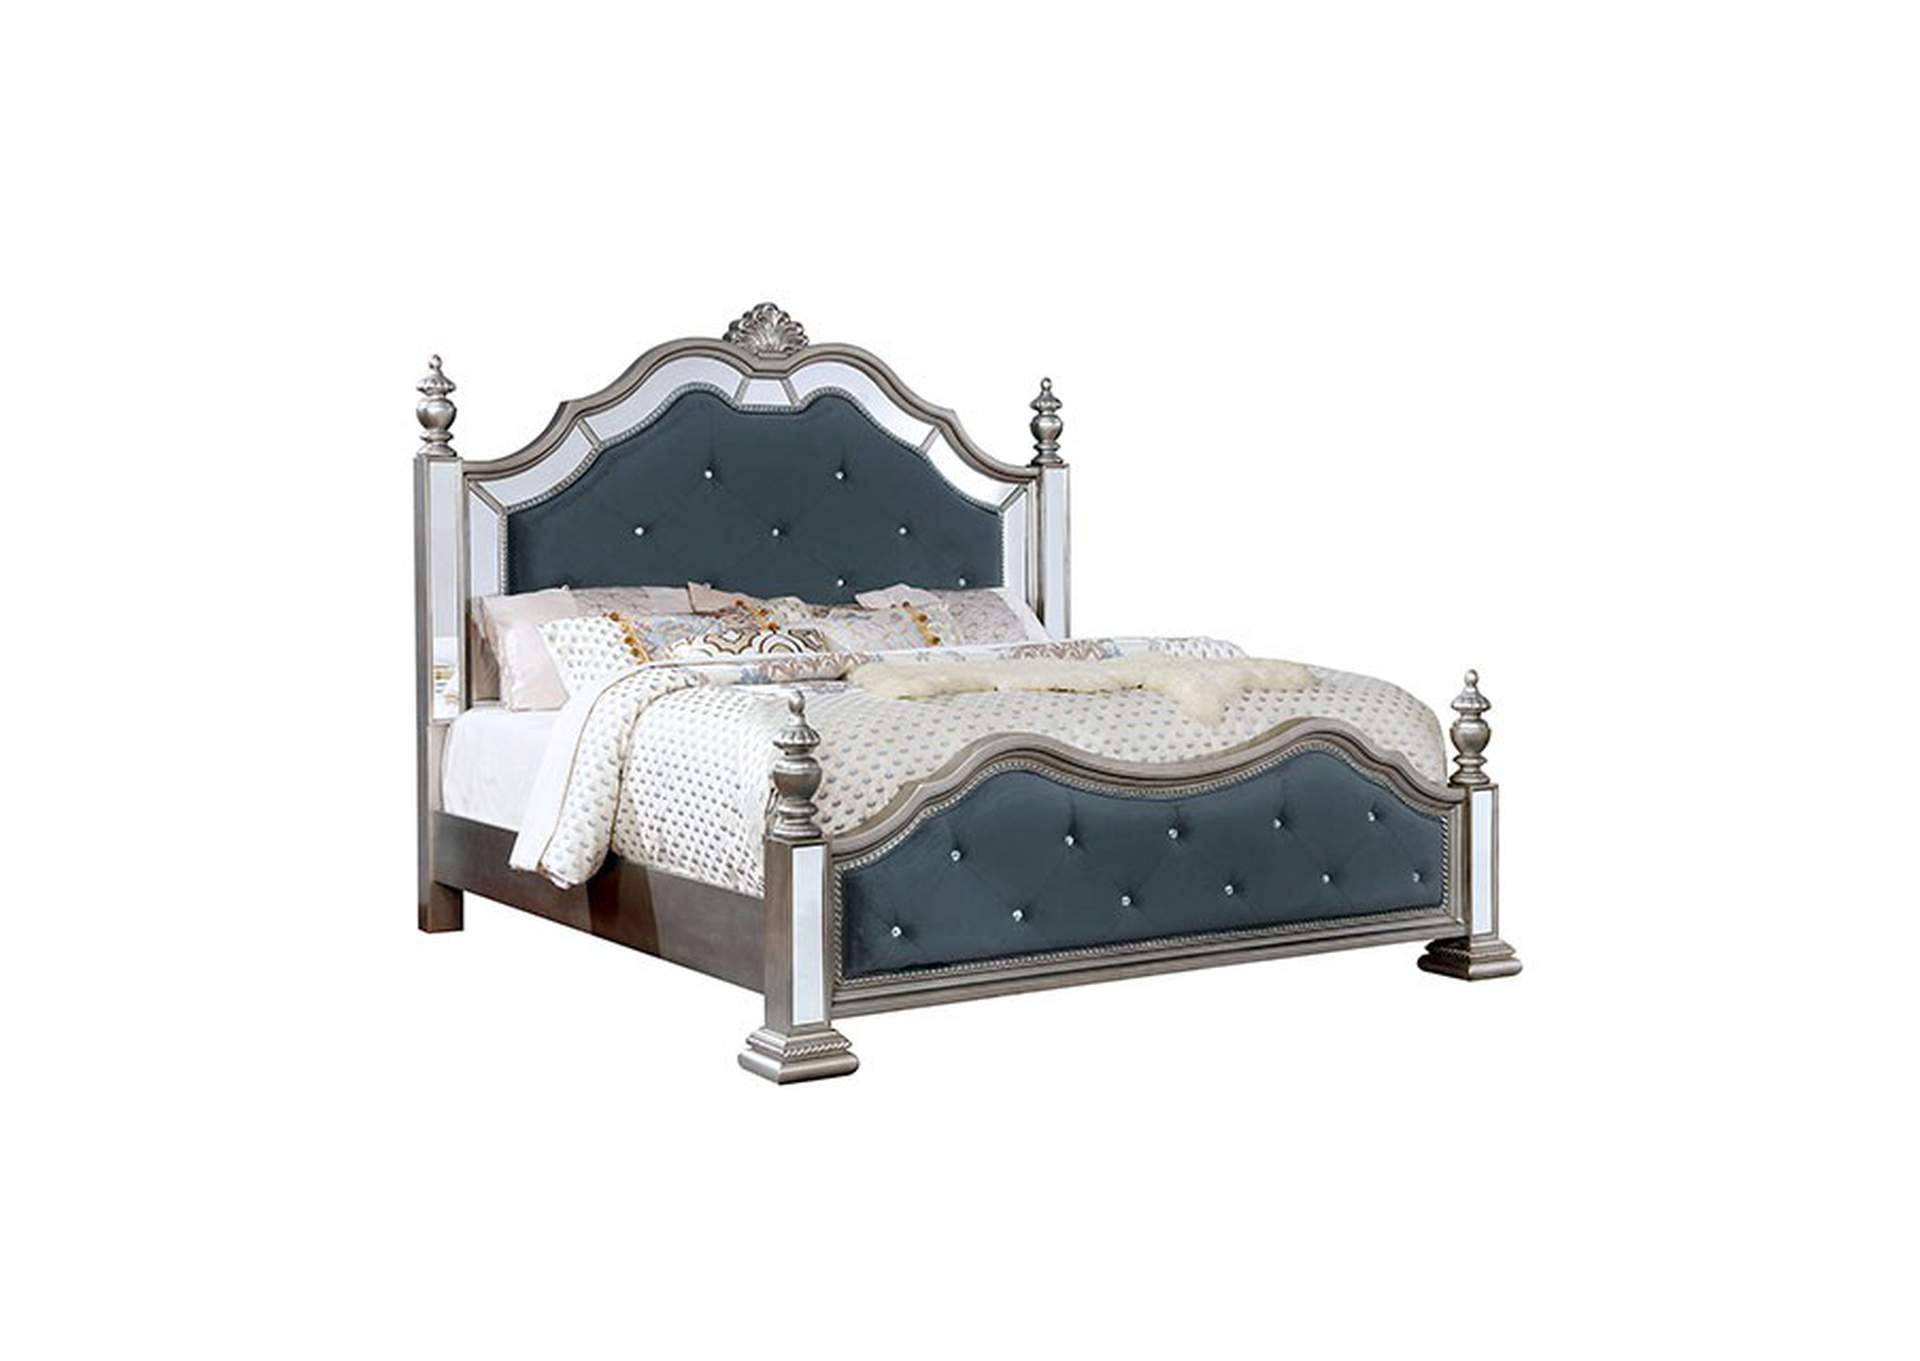 Azha Silver Queen Bed,Furniture of America